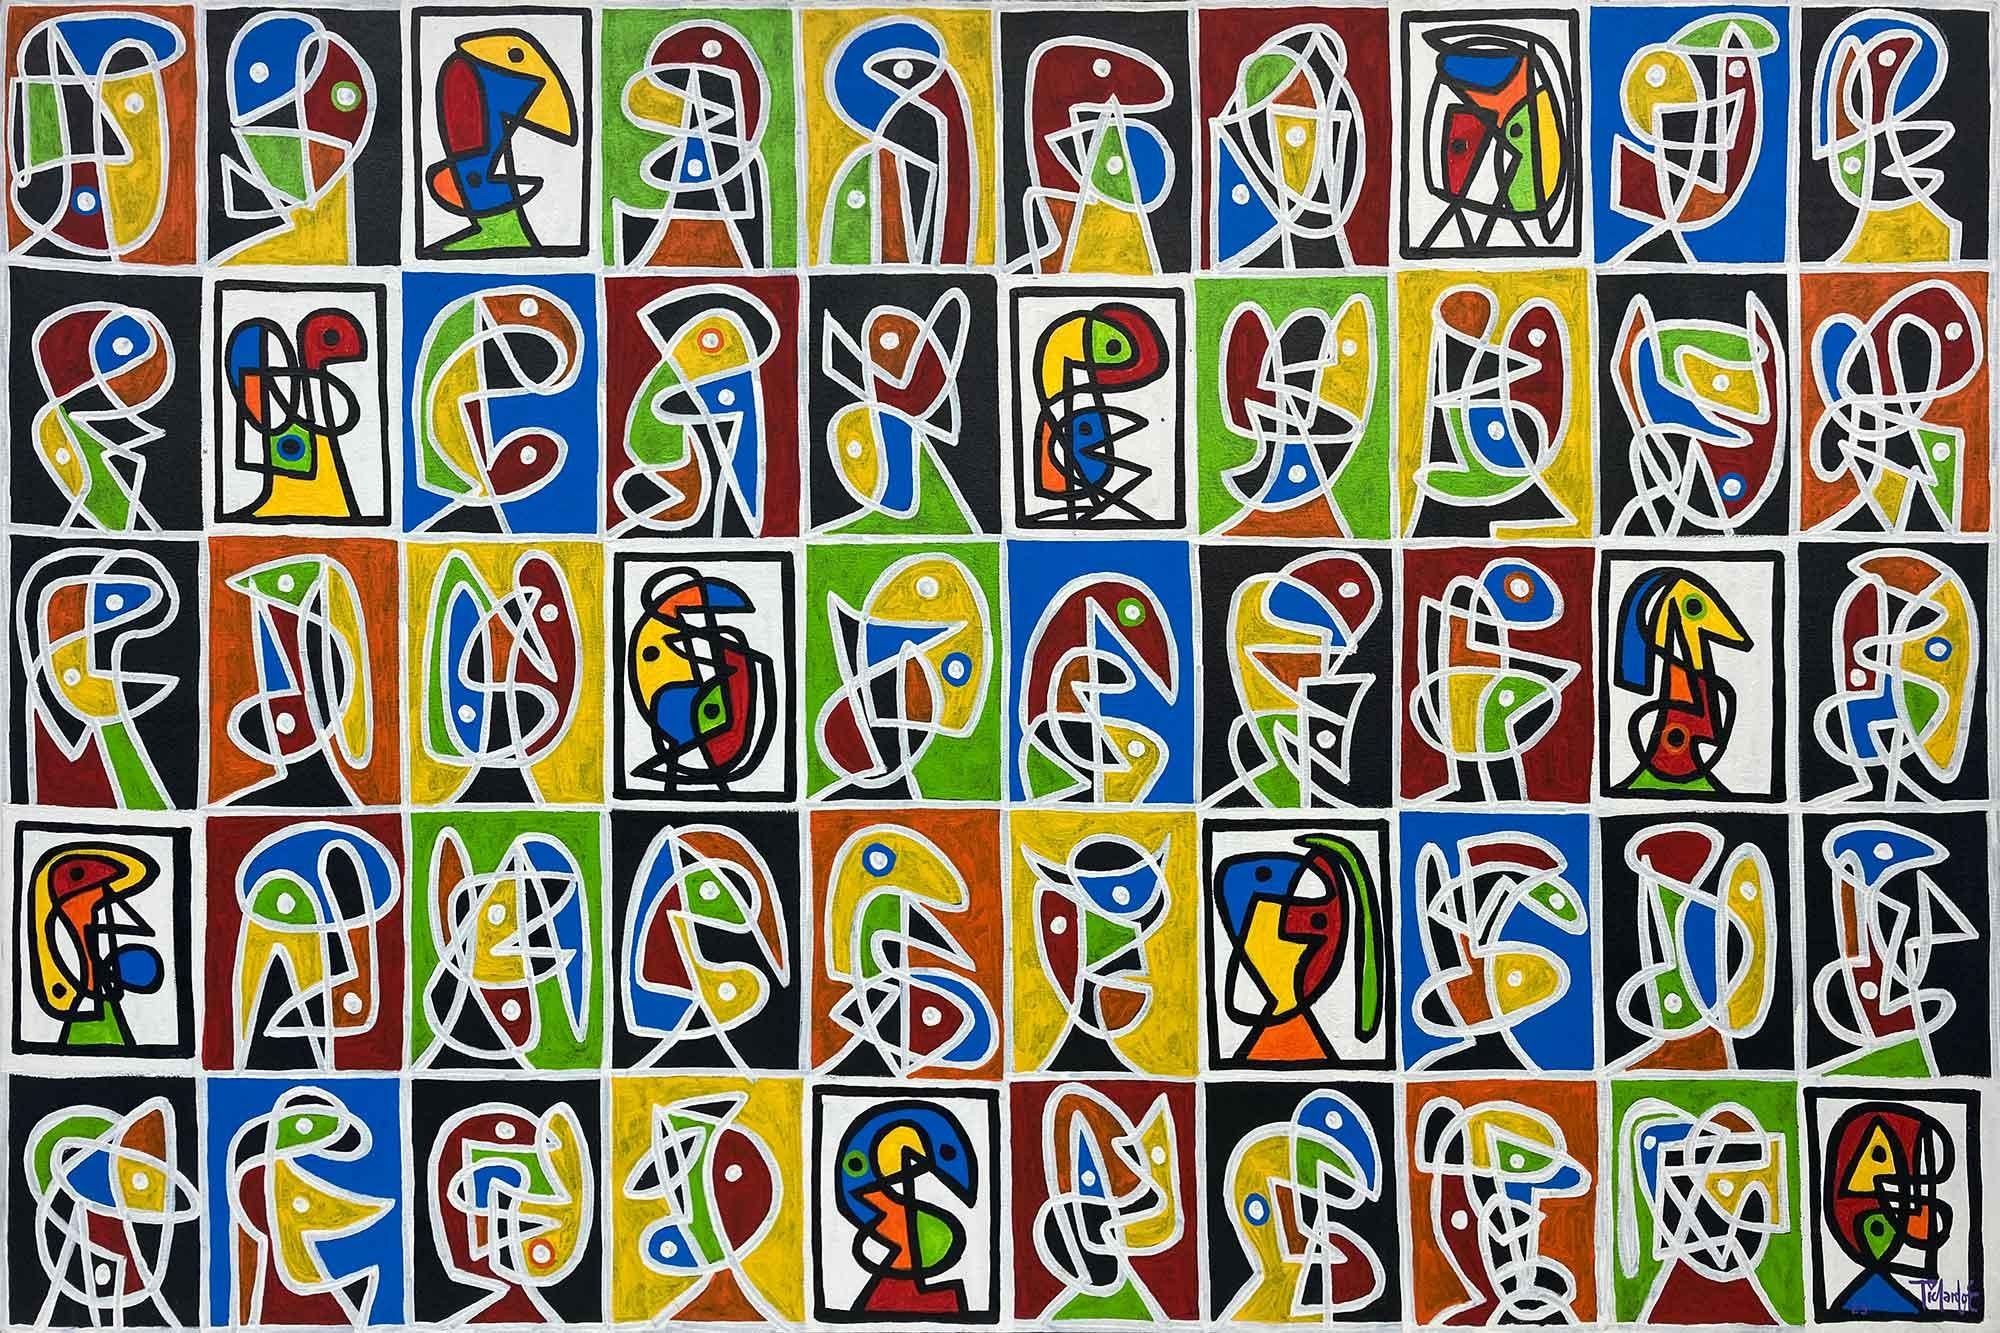 Contemporary Art, Abstract Painting
Acrylic on canvas
100x150cm
Signed 




About the artist
Enrique Pichardo (Mexico City, 1973) graduated from Escuela Nacional de Pintura, Escultura y Grabado (ENPEG) “La Esmeralda”. As a Mexican Contemporary